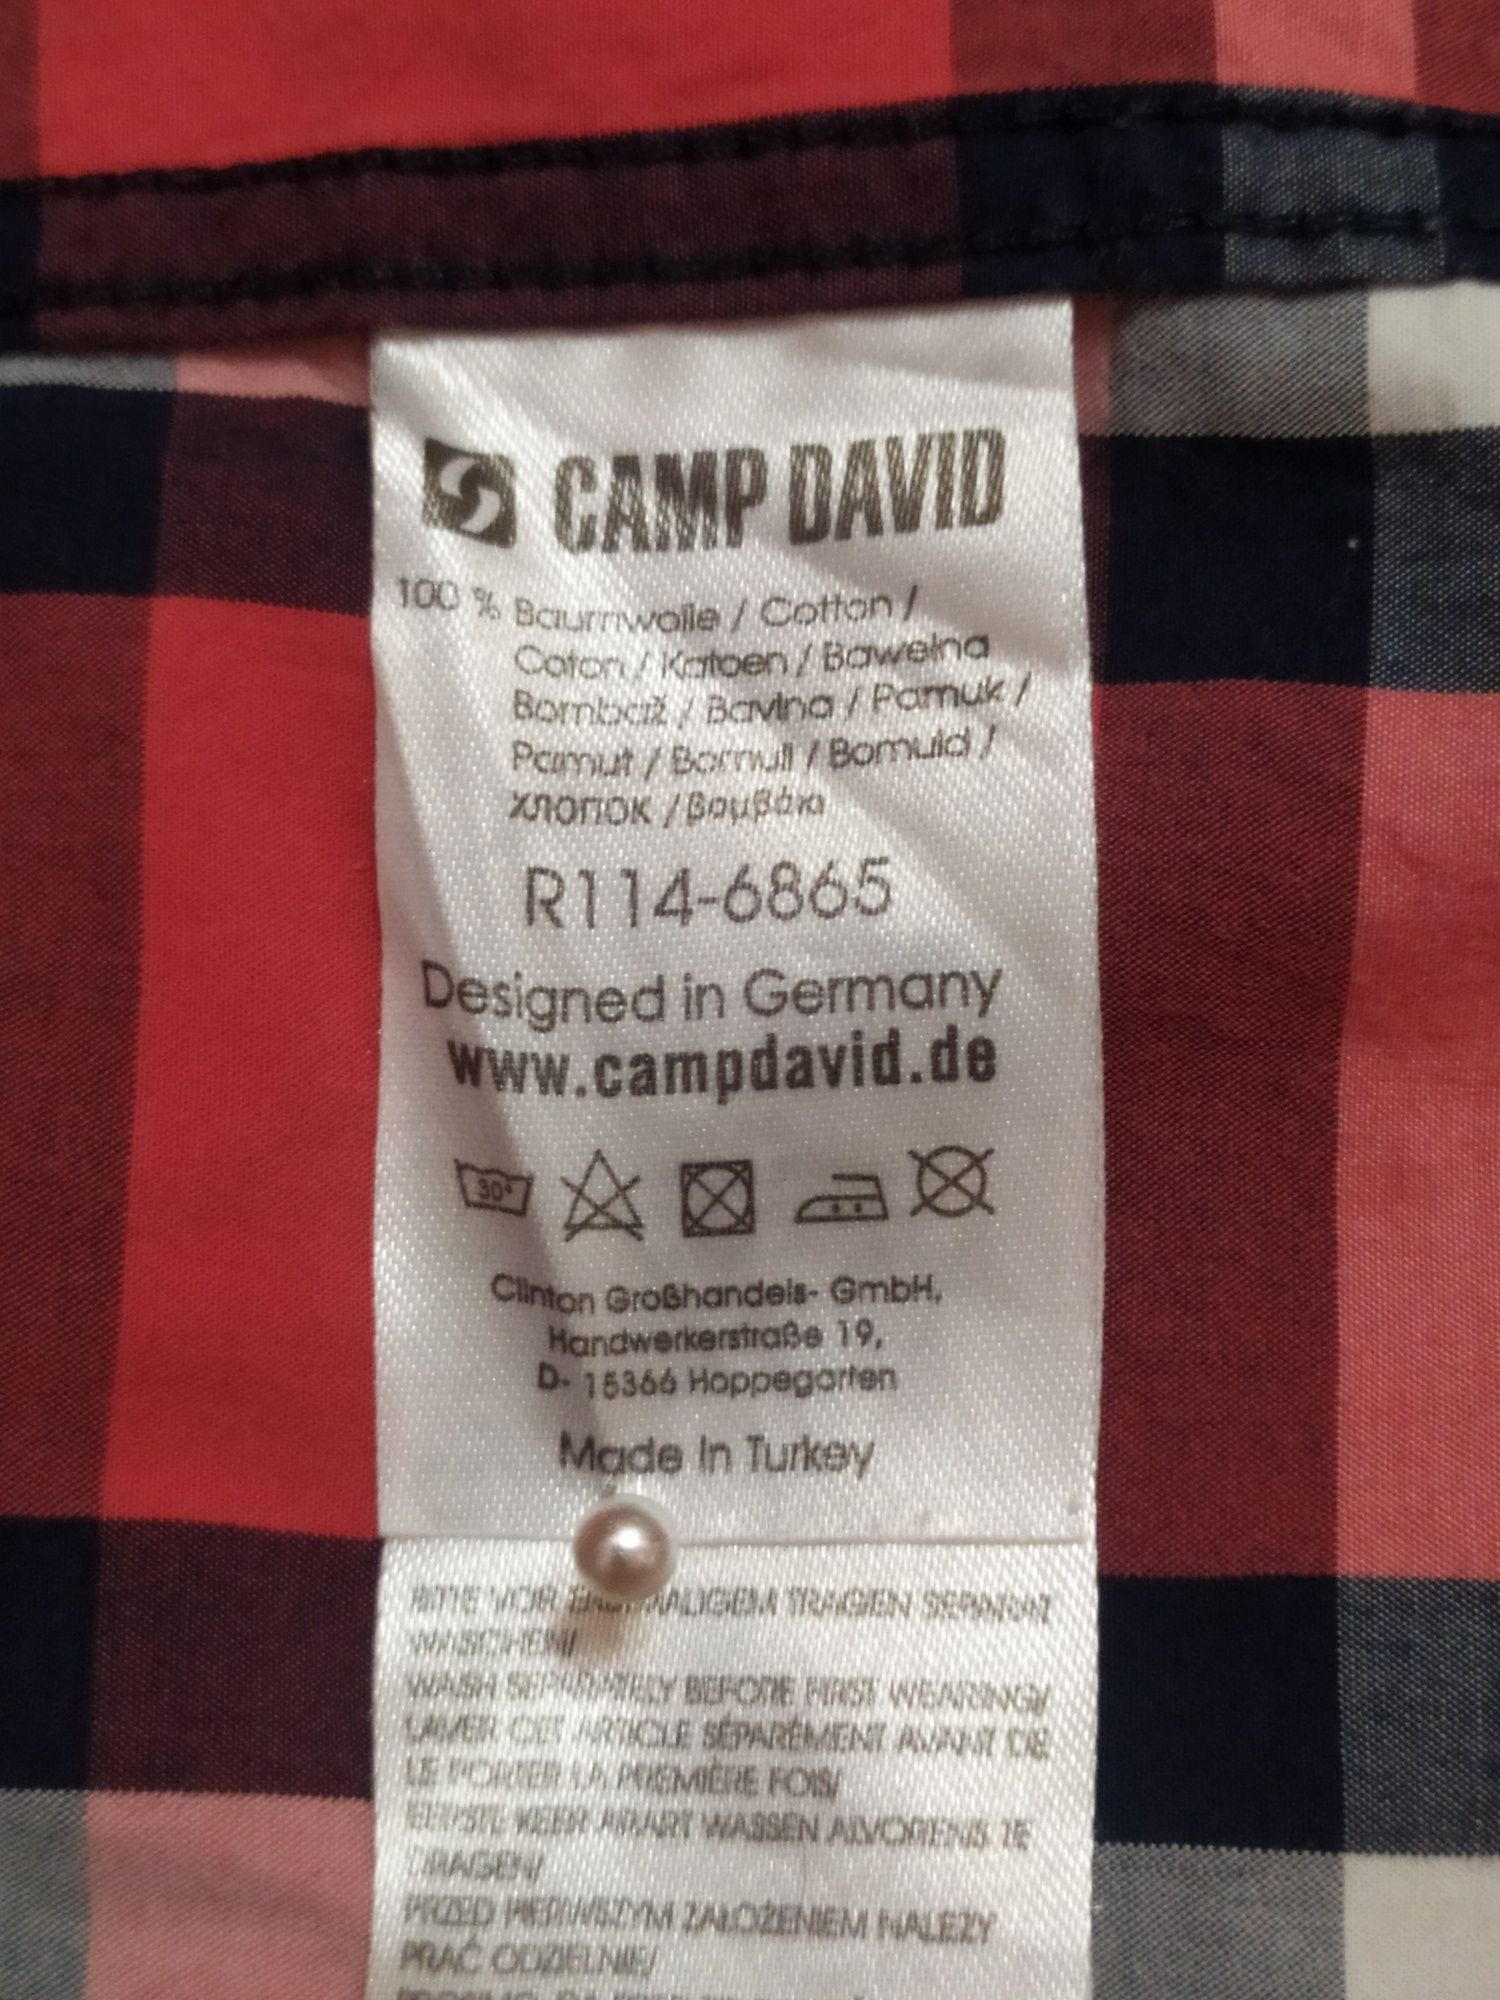 Camp David Red рубашка Германия, cotton 100%, р. M, 48-50-52, супер!